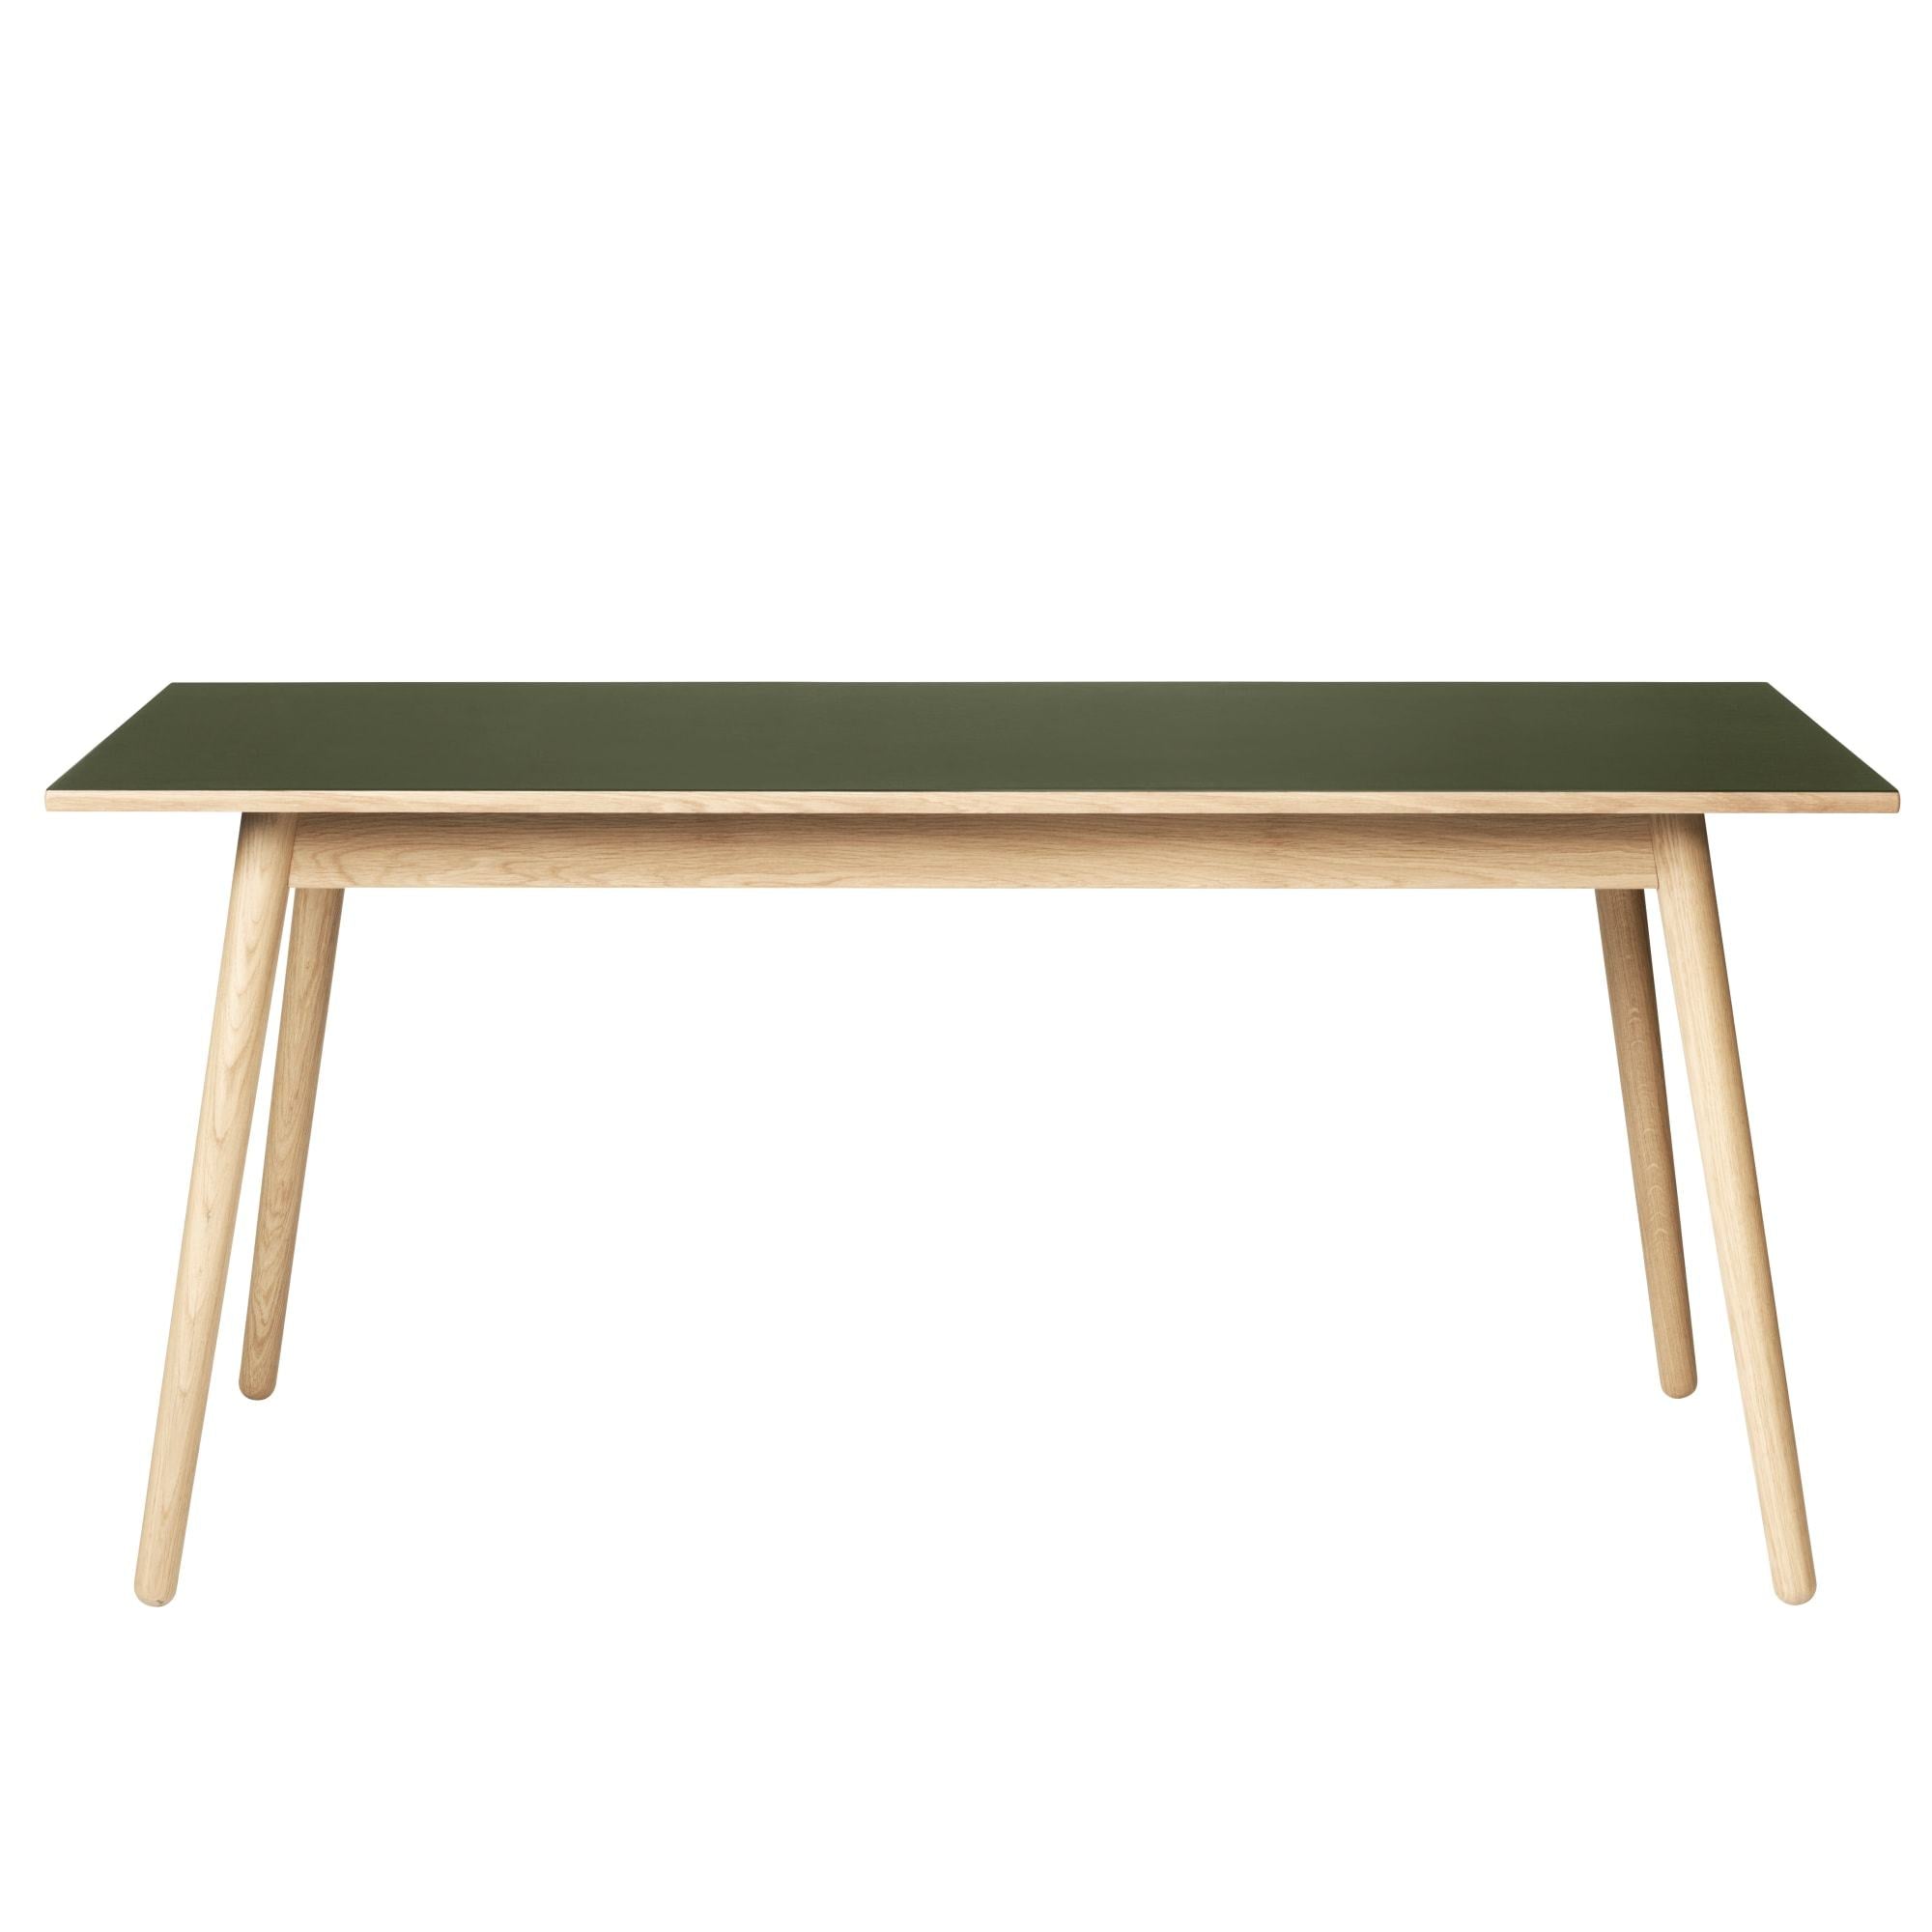 FDB Møbler C35 B Table à manger Oak, Linoleum Olives, 160 cm